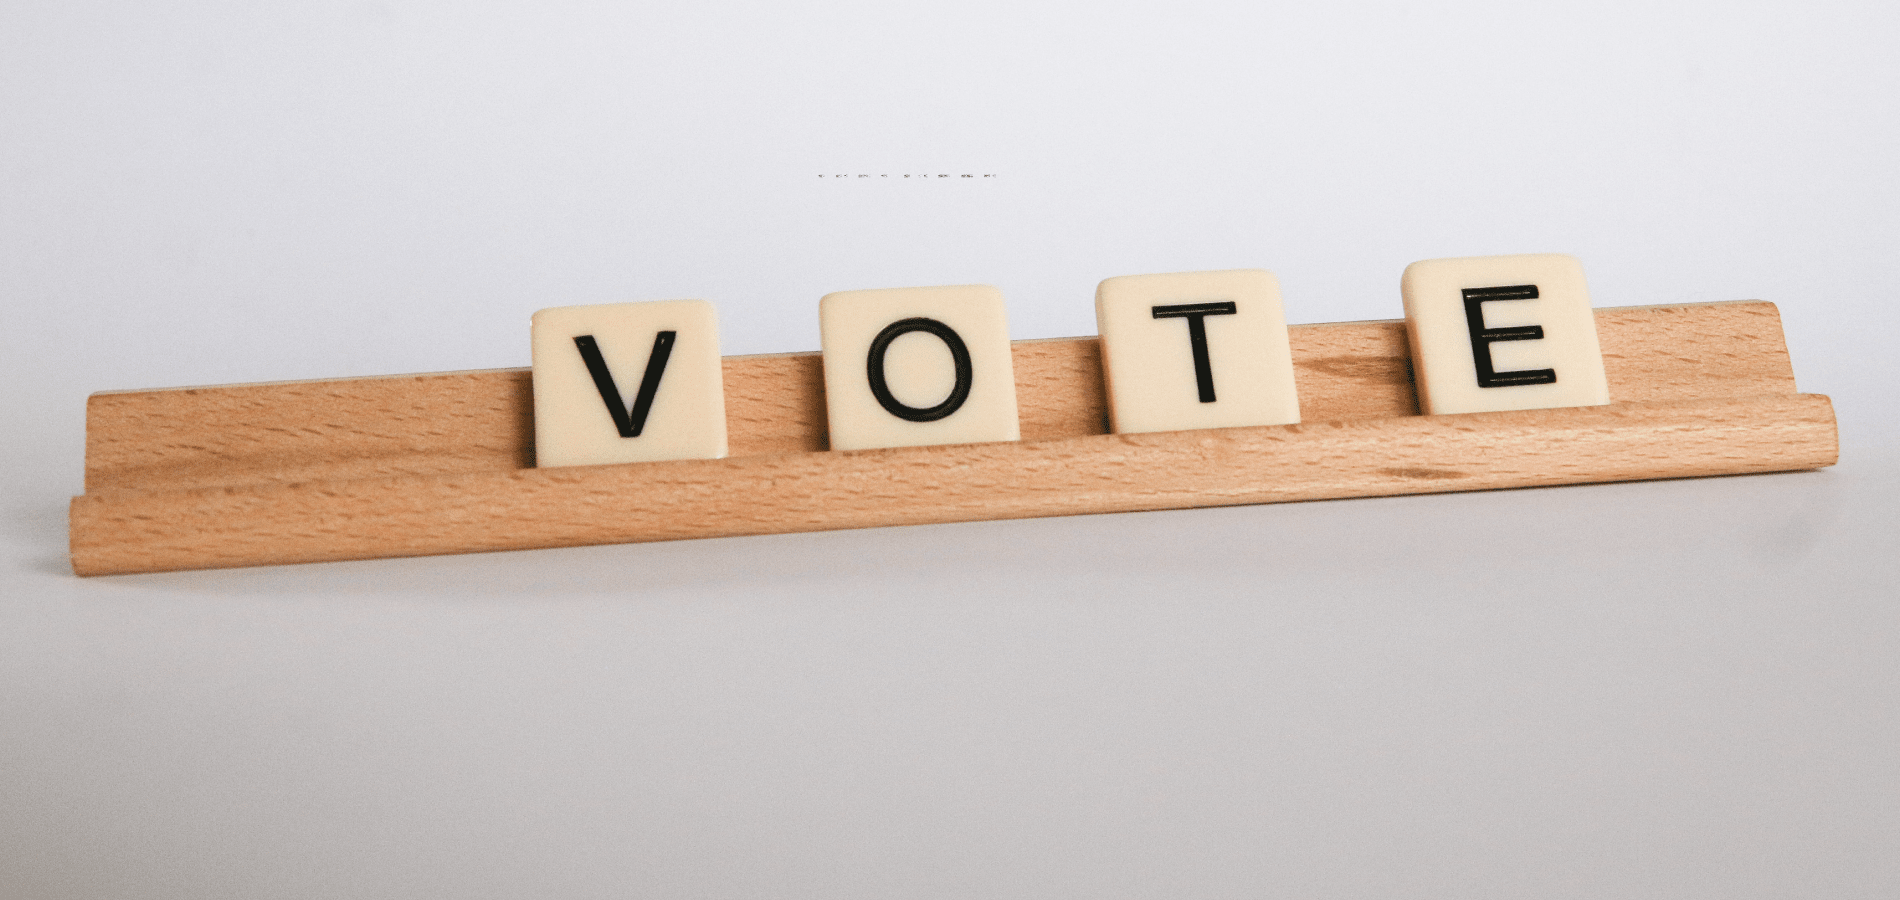 the word "vote" in scrabble tiles